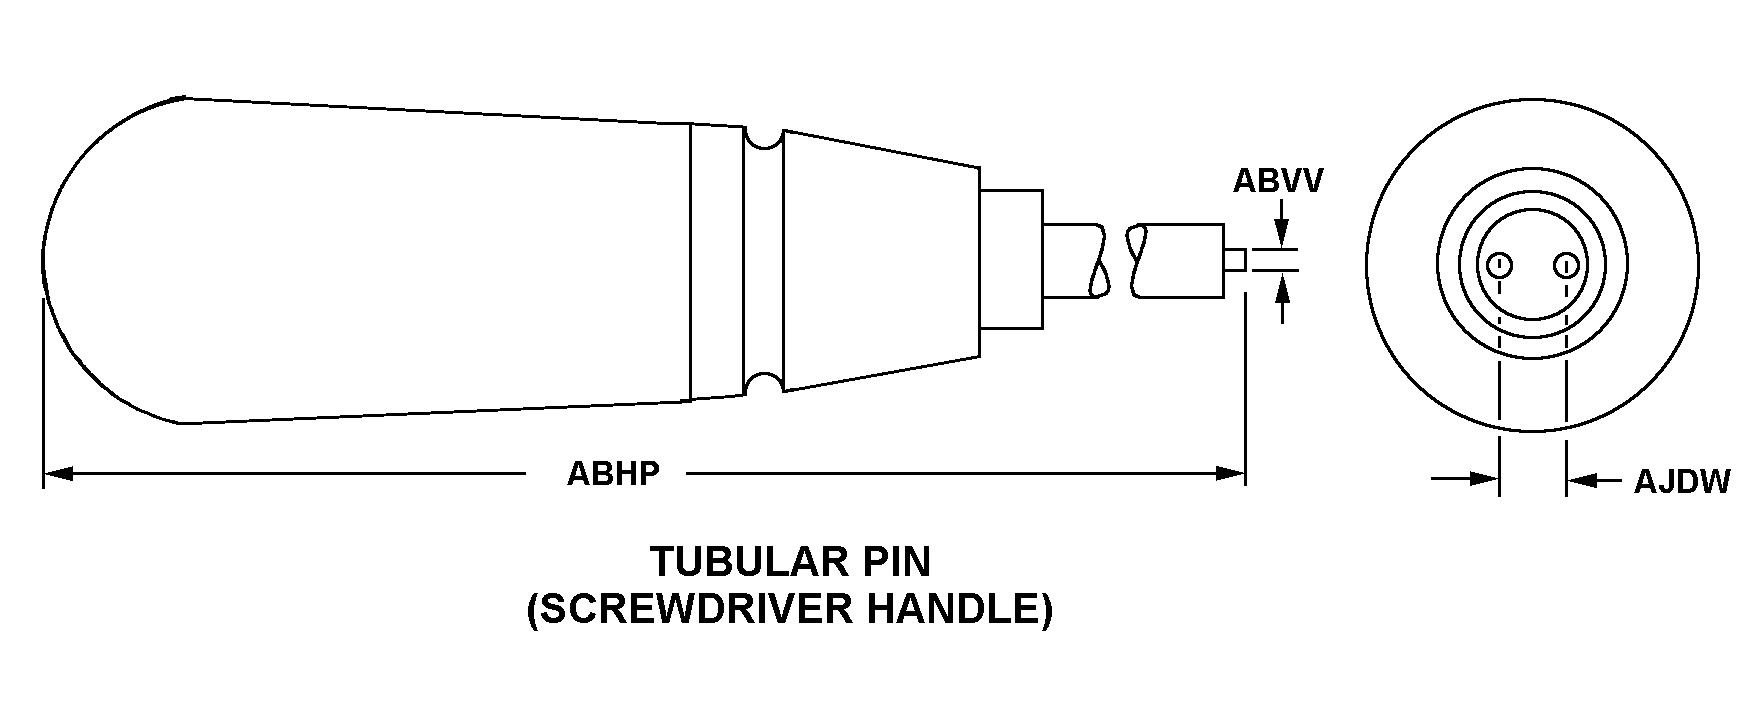 TUBULAR PIN style nsn 5120-00-314-7282